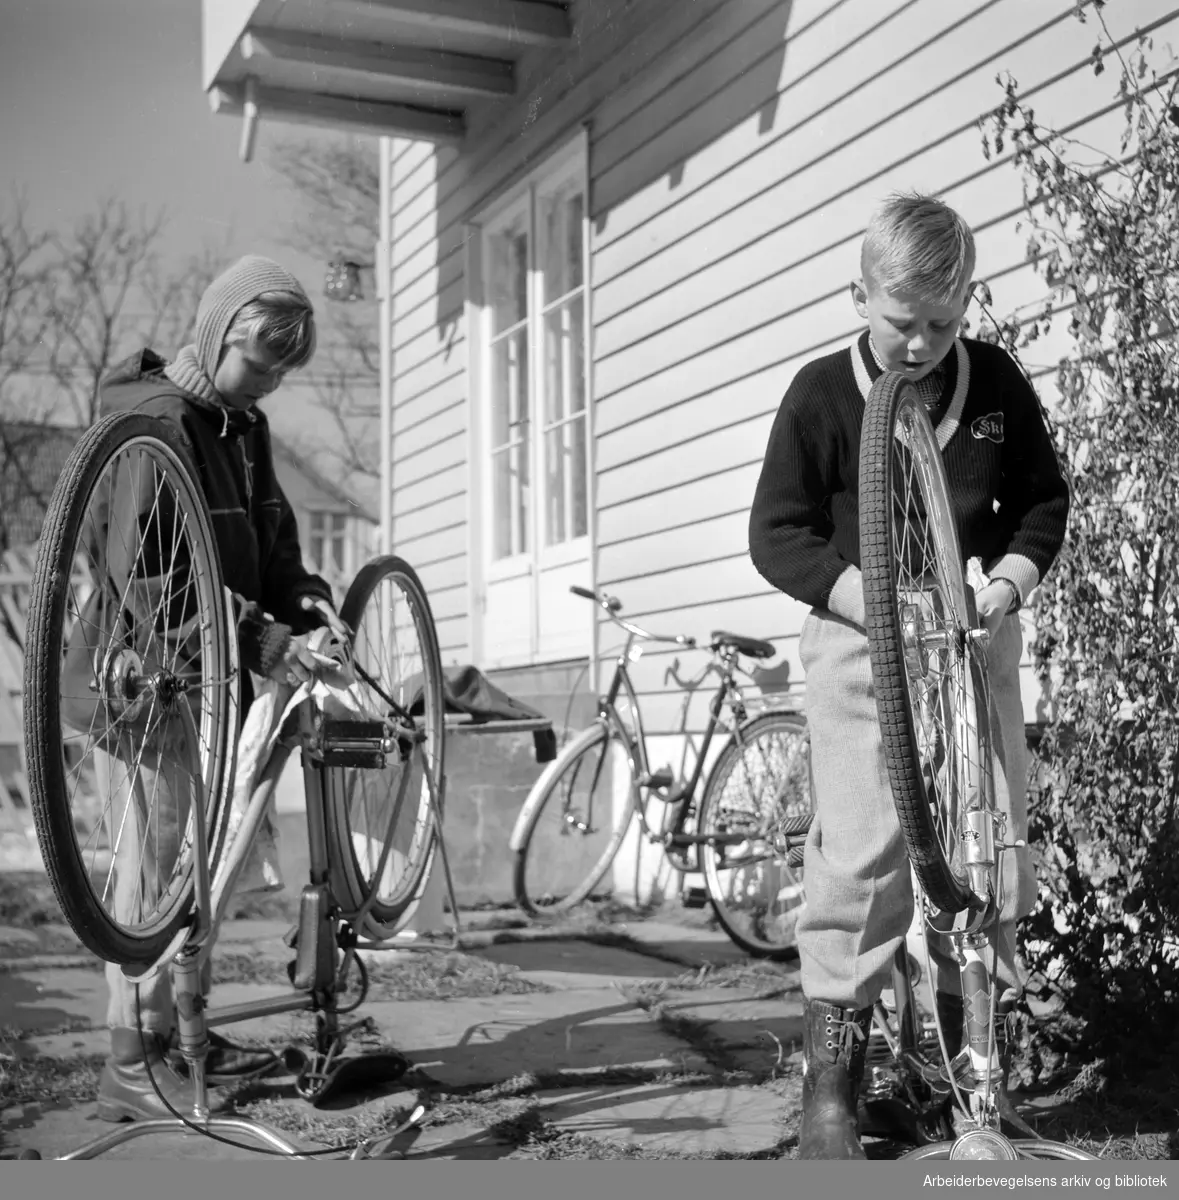 Vårens sykkelpuss. Villastrøk i Oslo-området. April 1958.